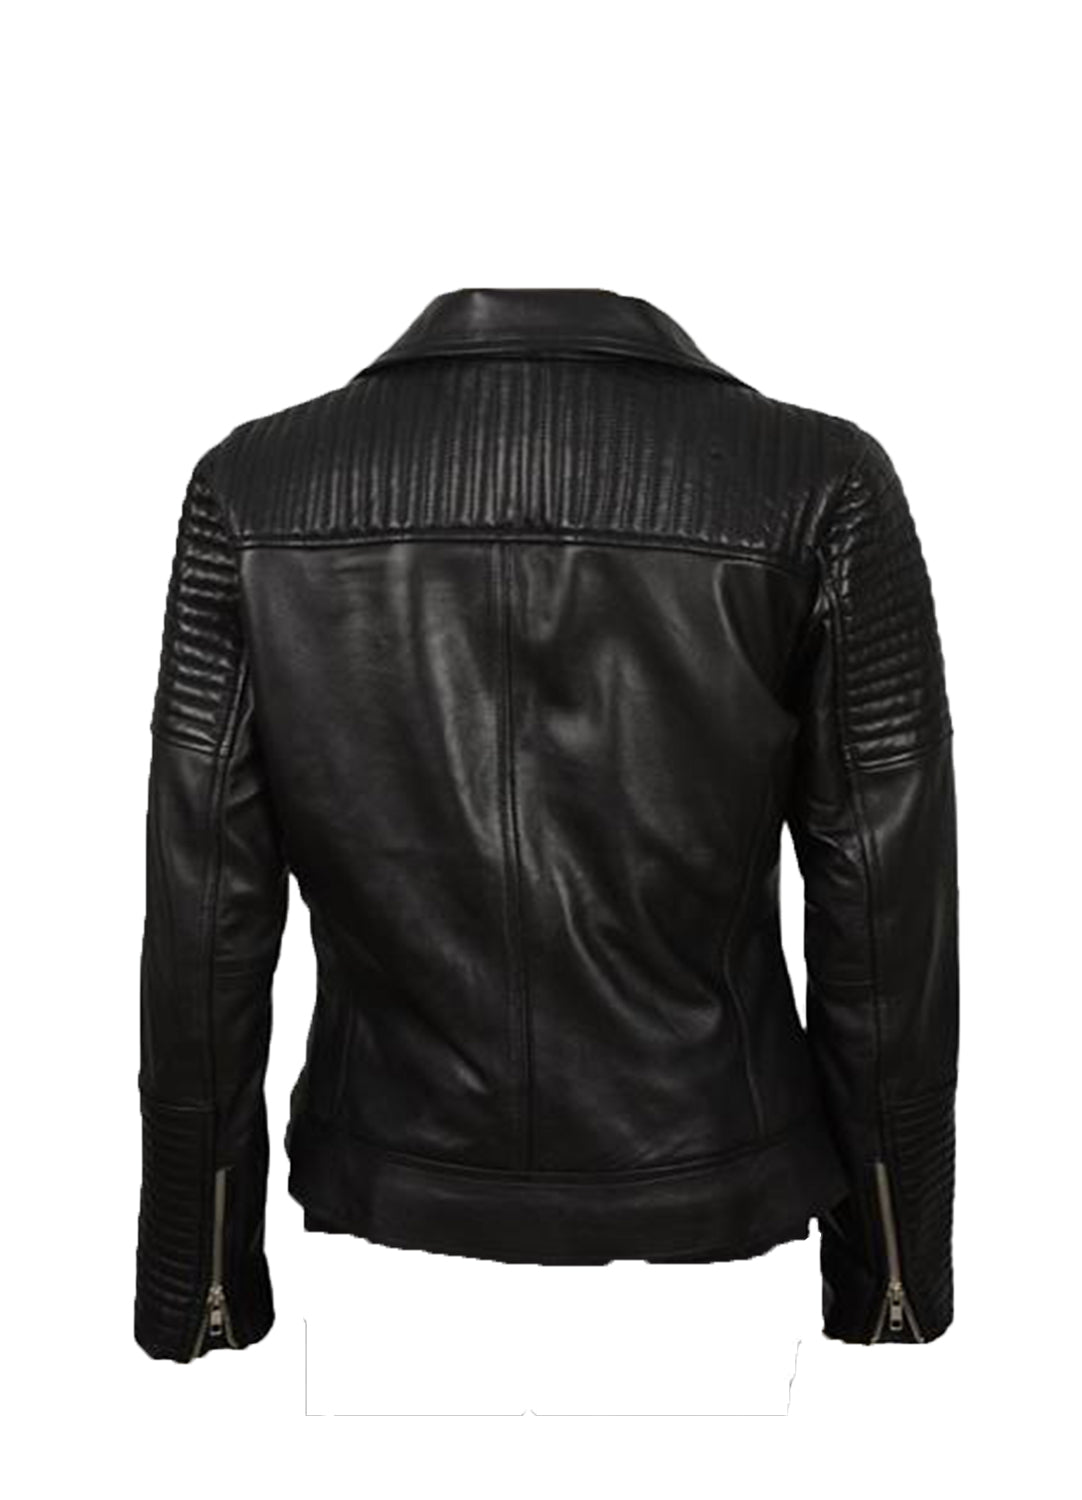 Yellowstone Black Biker Leather Jacket | Elite Jacket